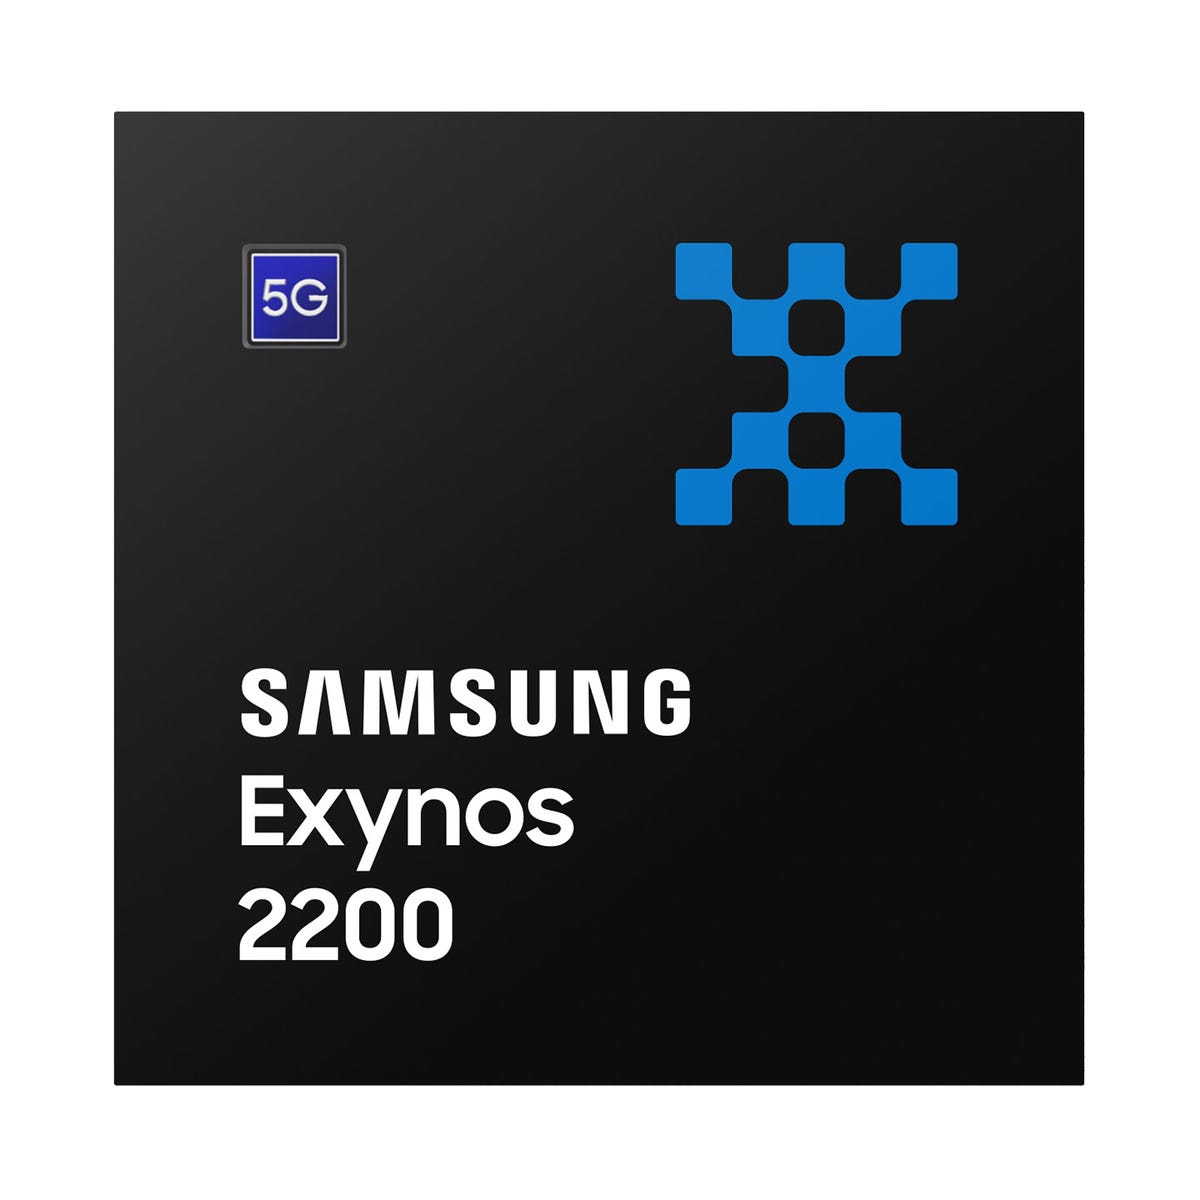 samsung-exynos-2200-image-01.jpg